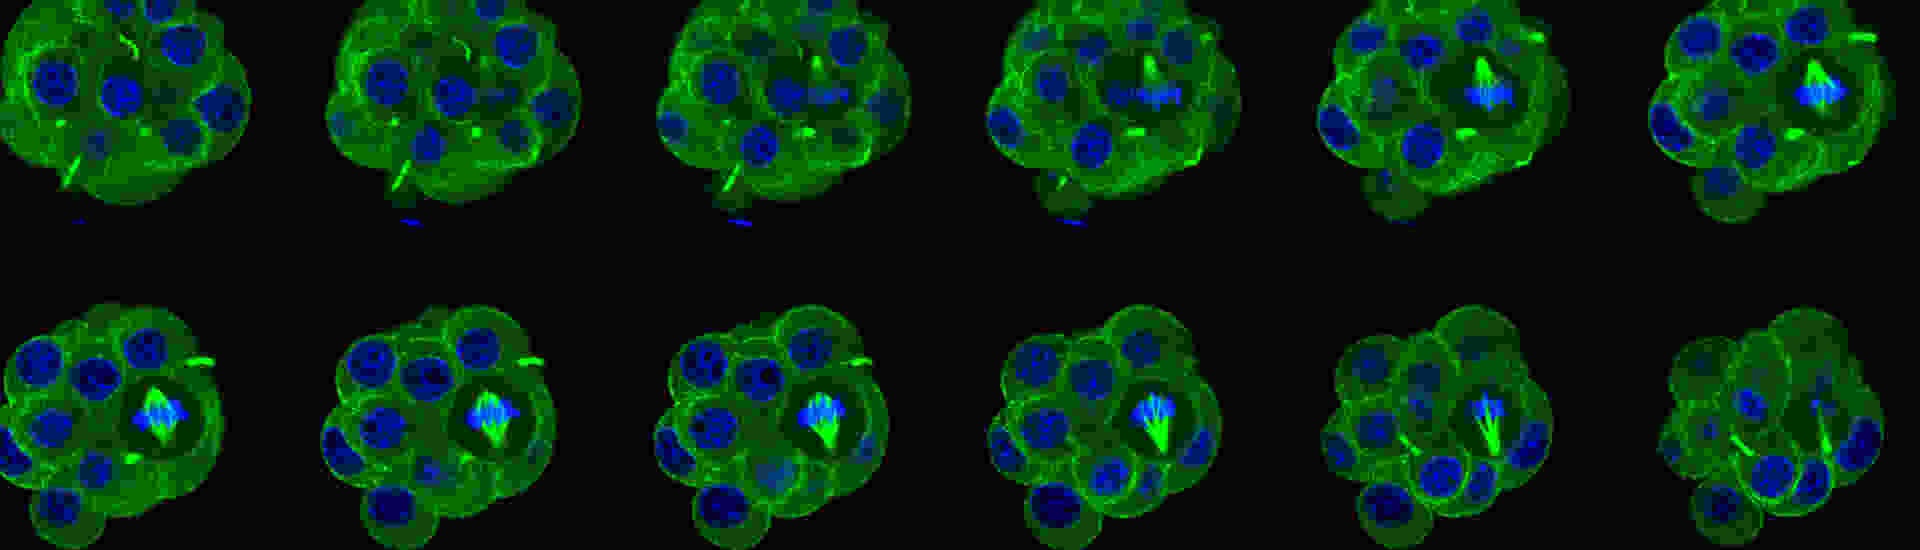 Flourescent cells dividing